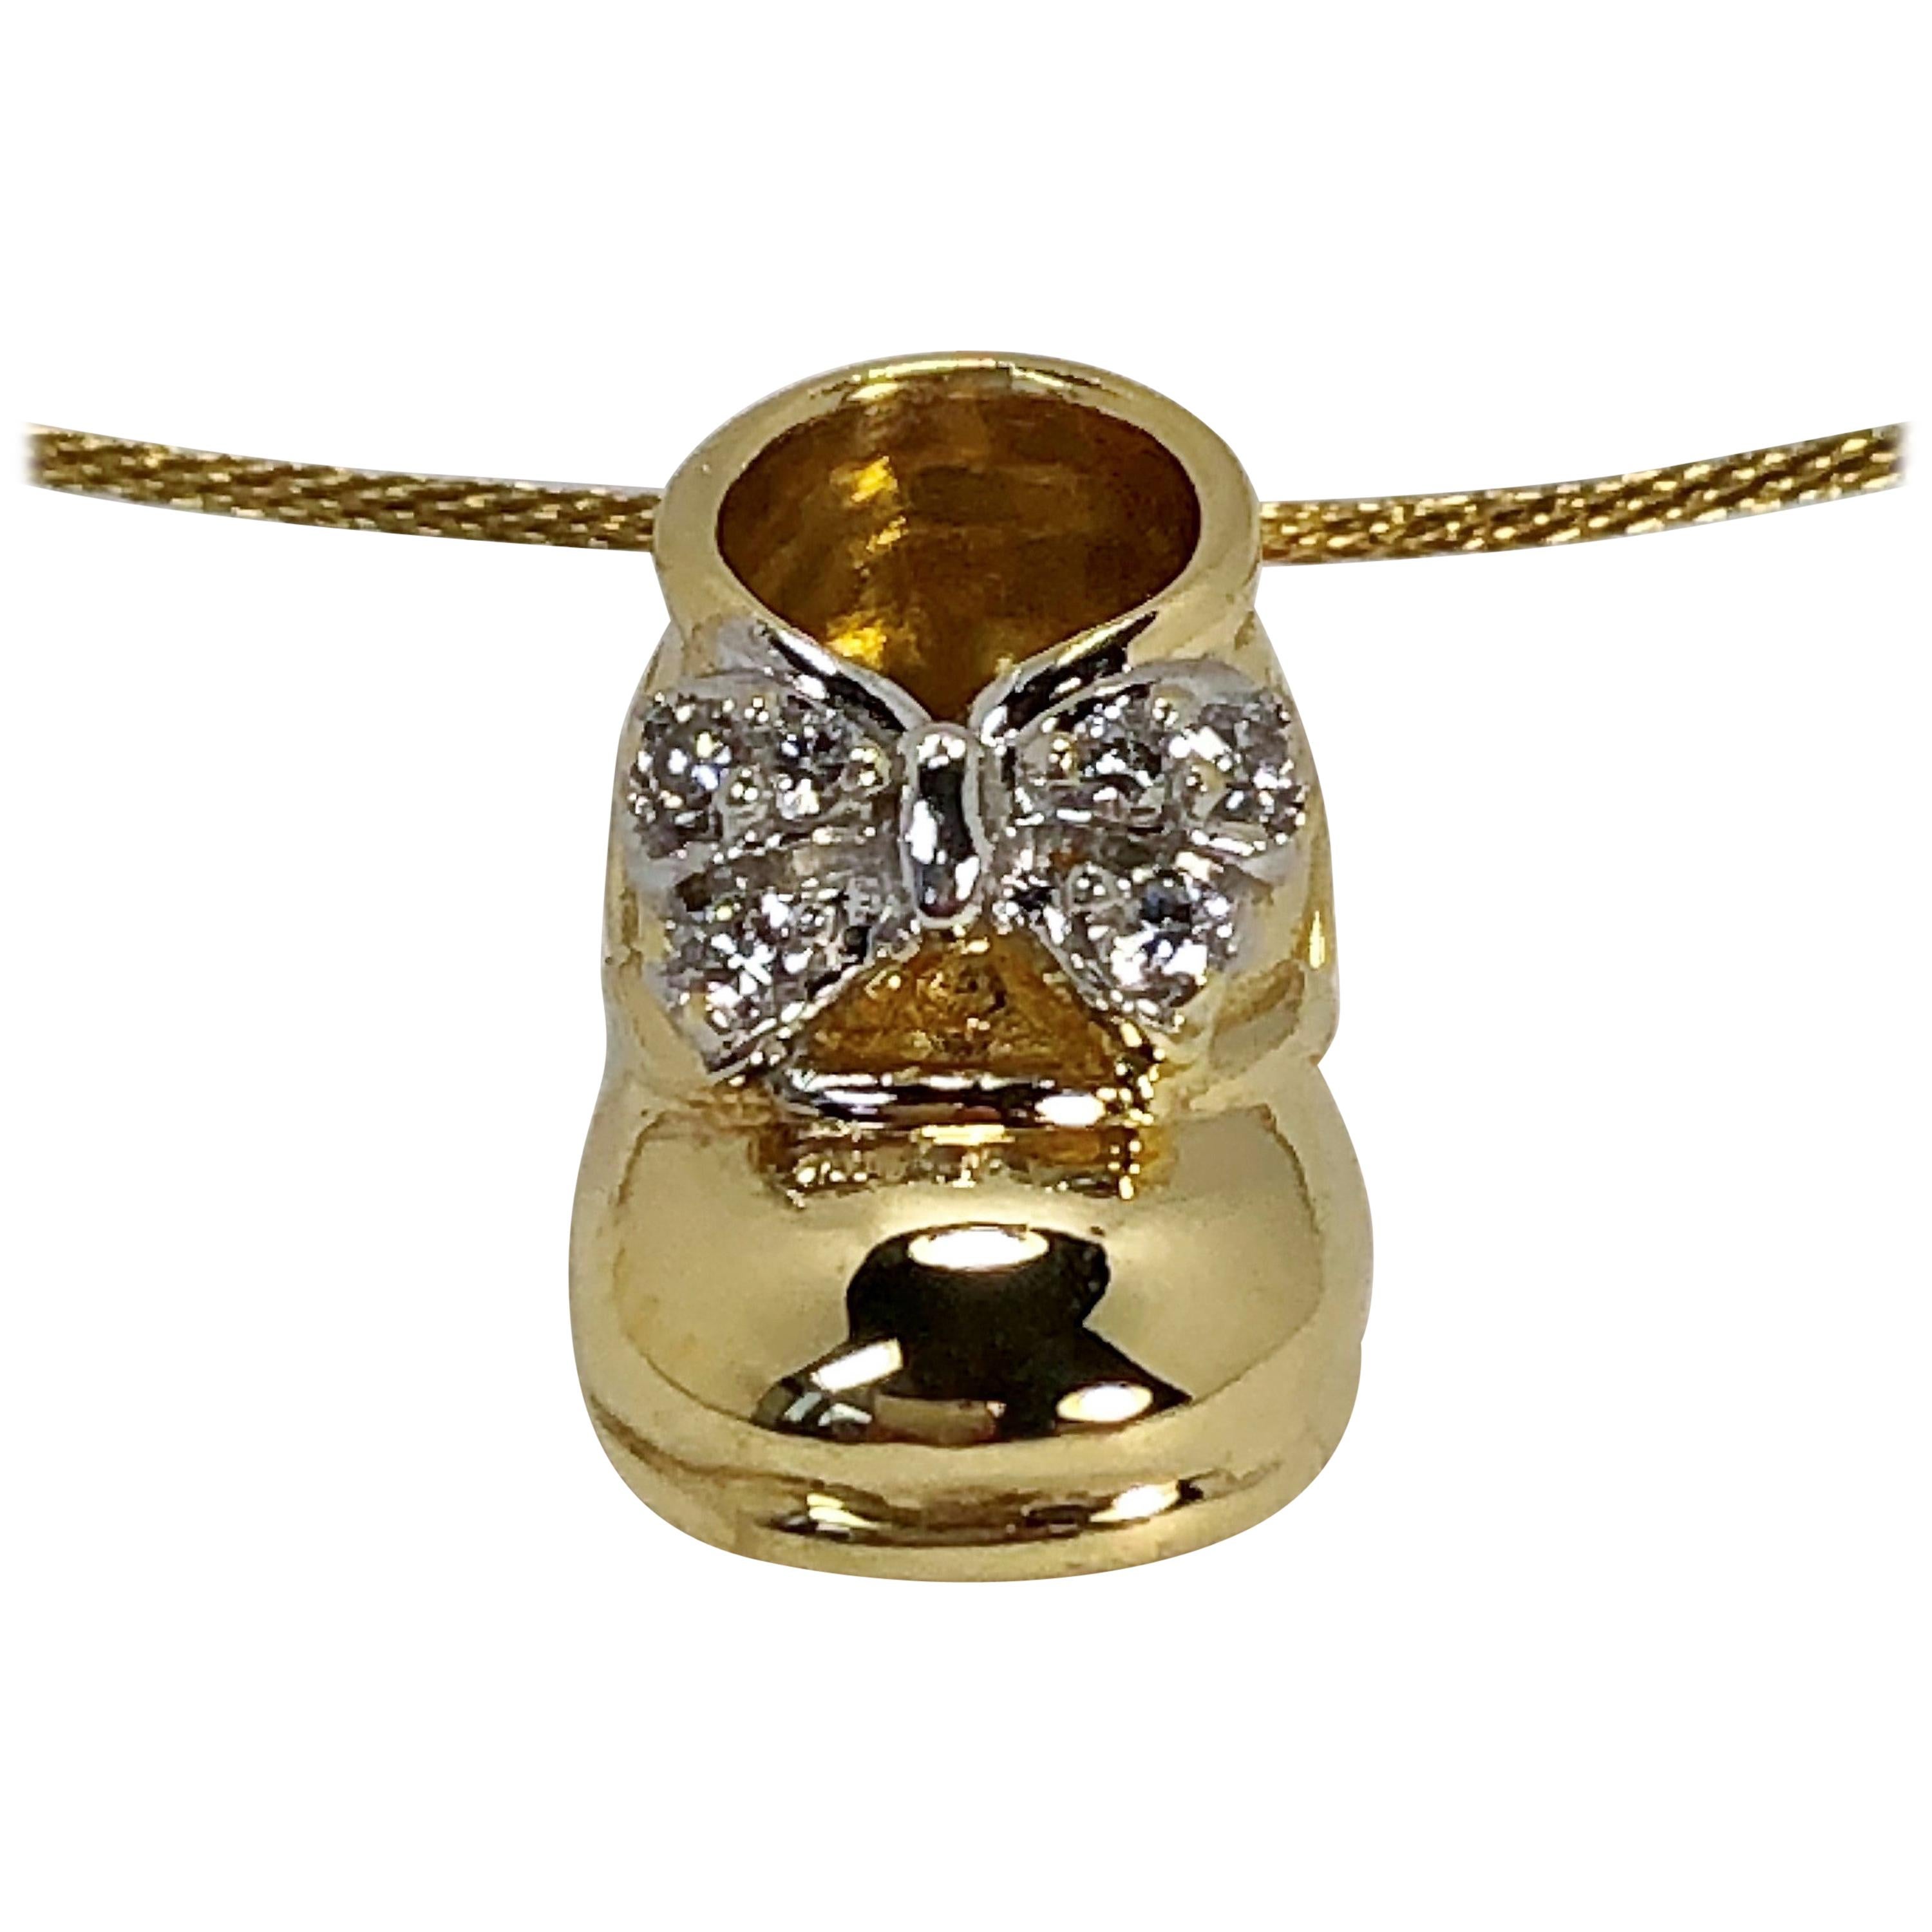 Gold and Diamond Baby Shoe Pendant on a Thin Gold Choker, Perfect Push Present